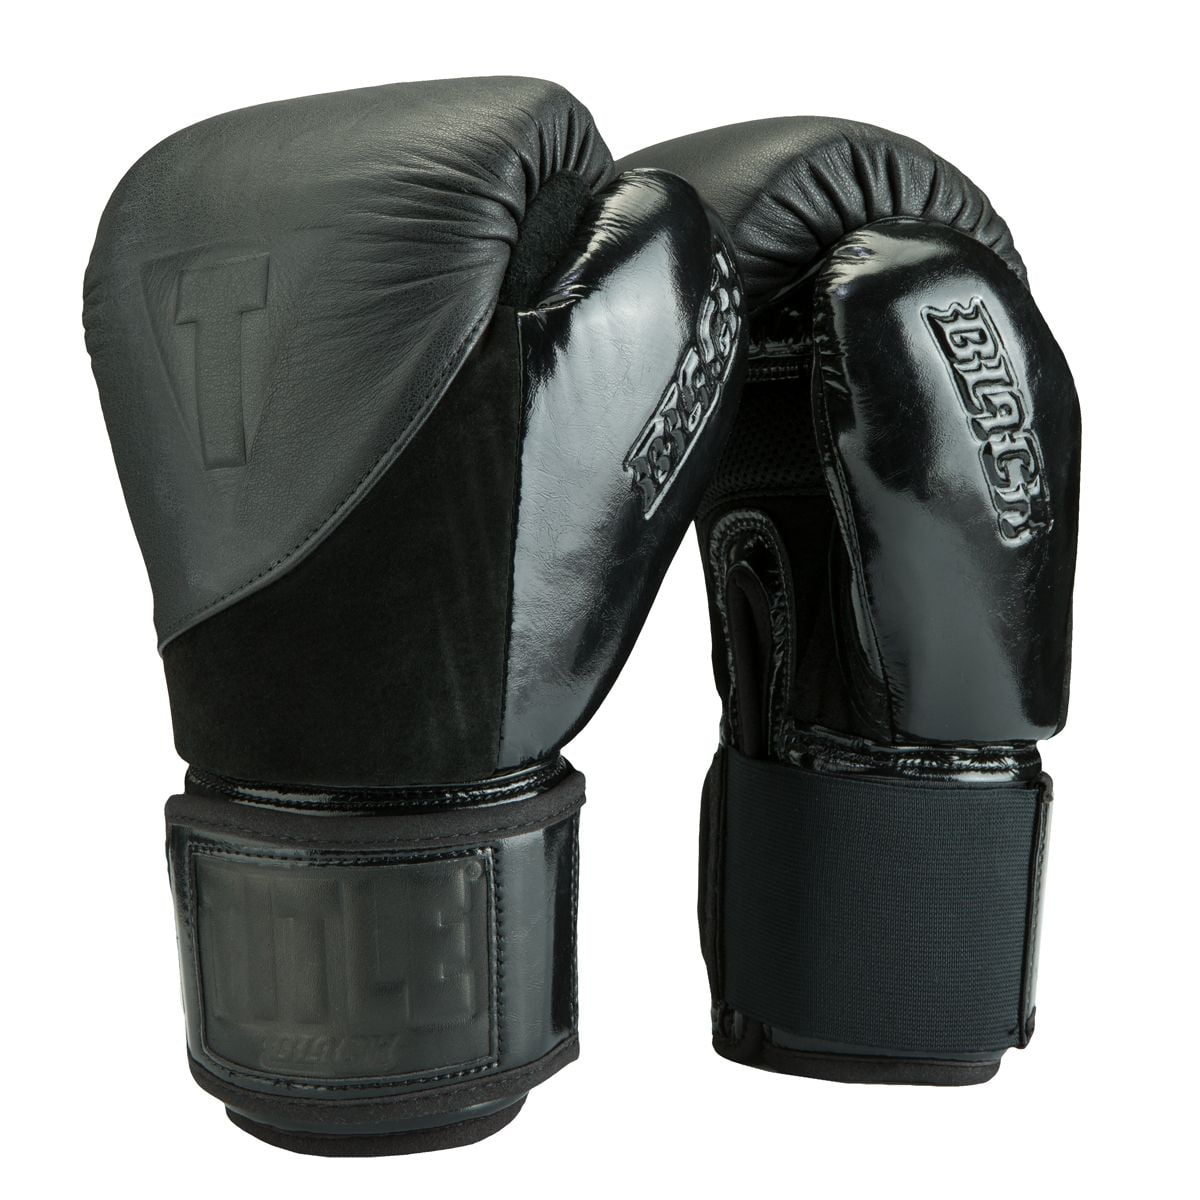 Blitz Kickboxing Black & White Gloves 